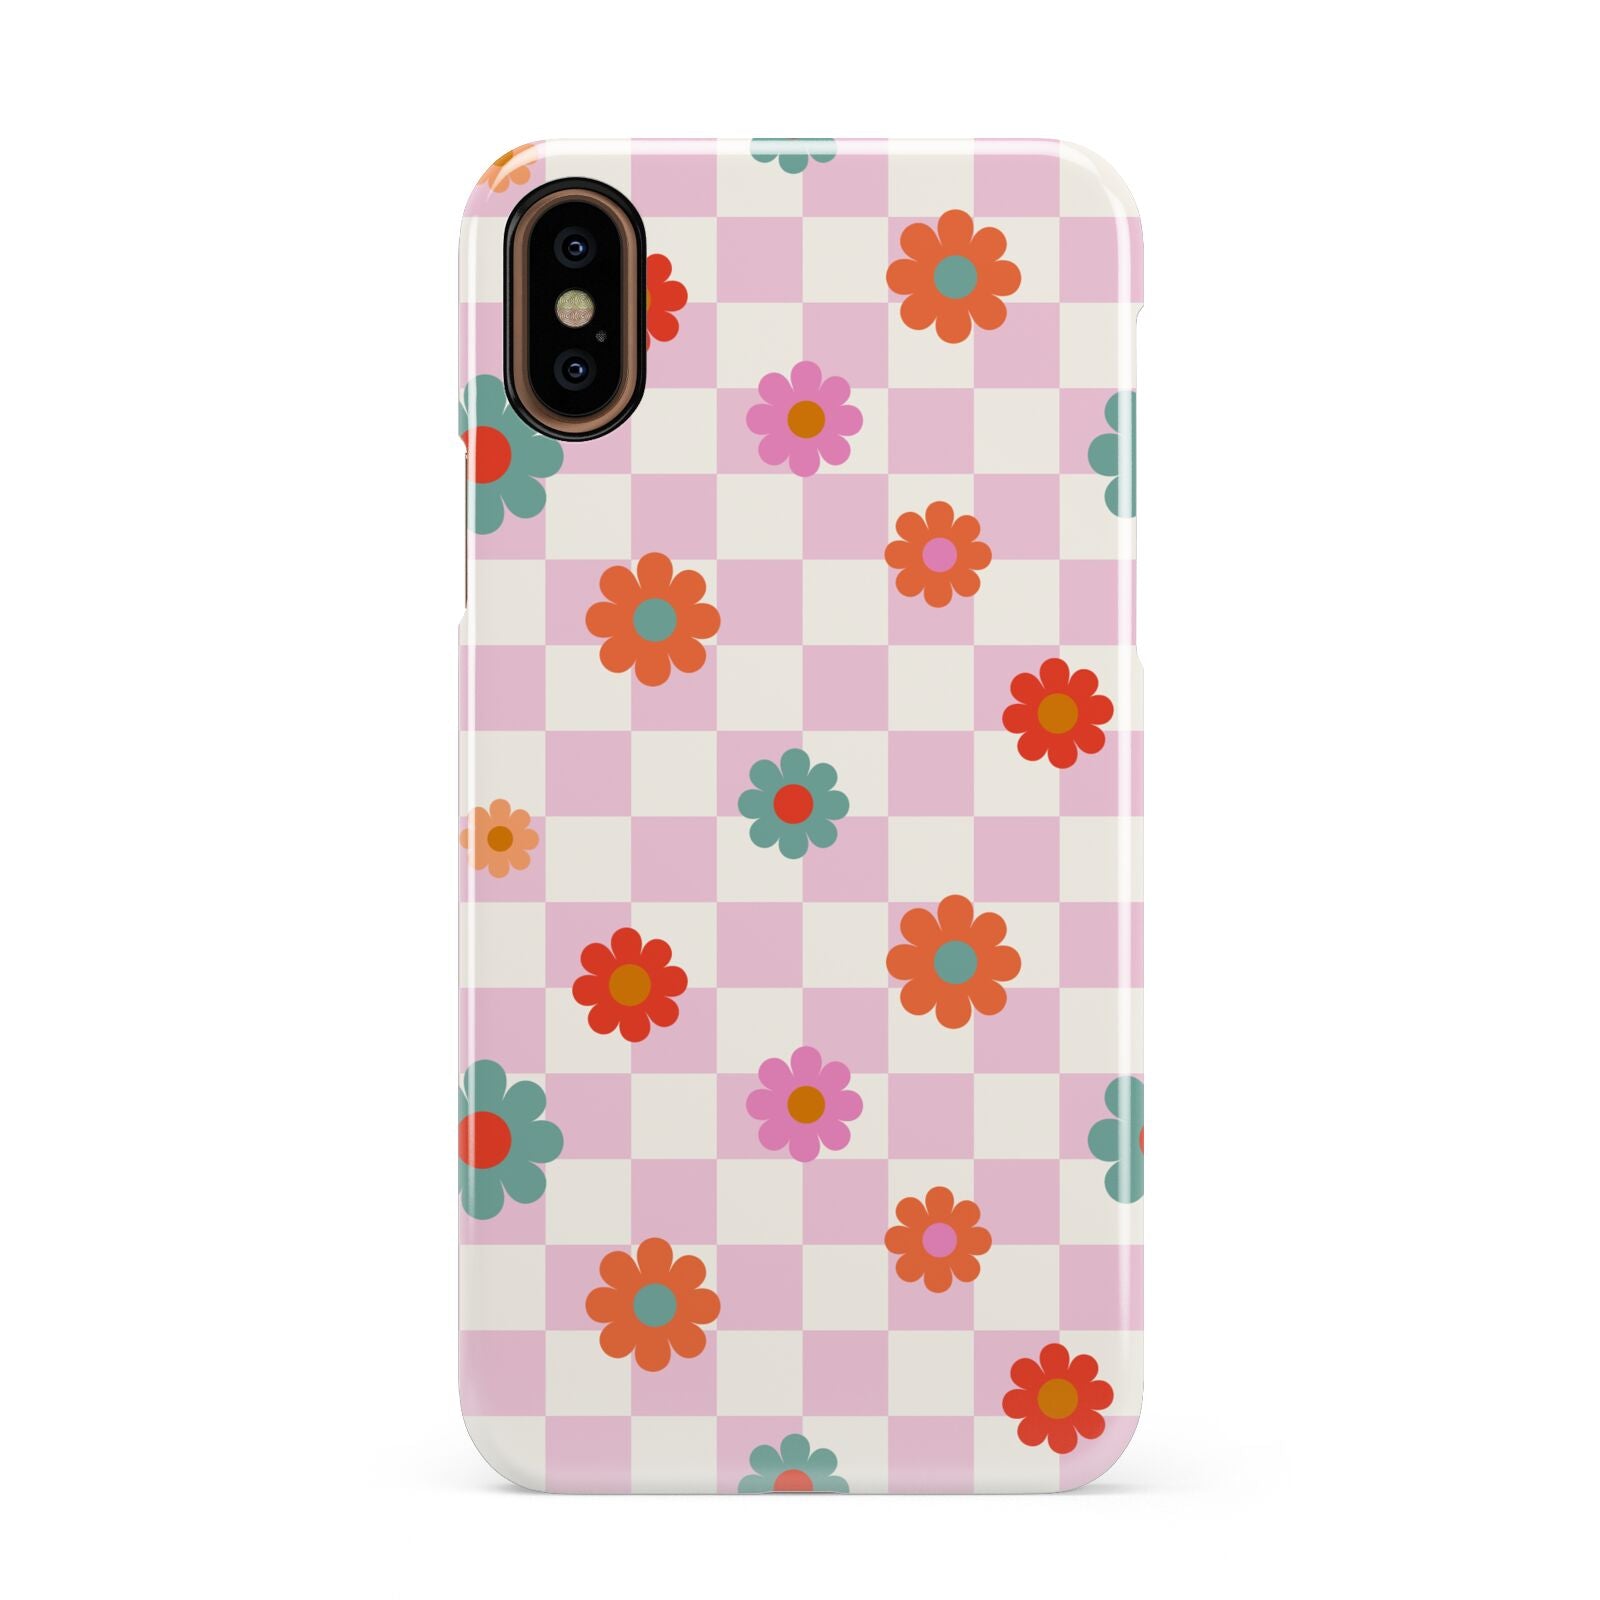 Flower Power Apple iPhone XS 3D Snap Case